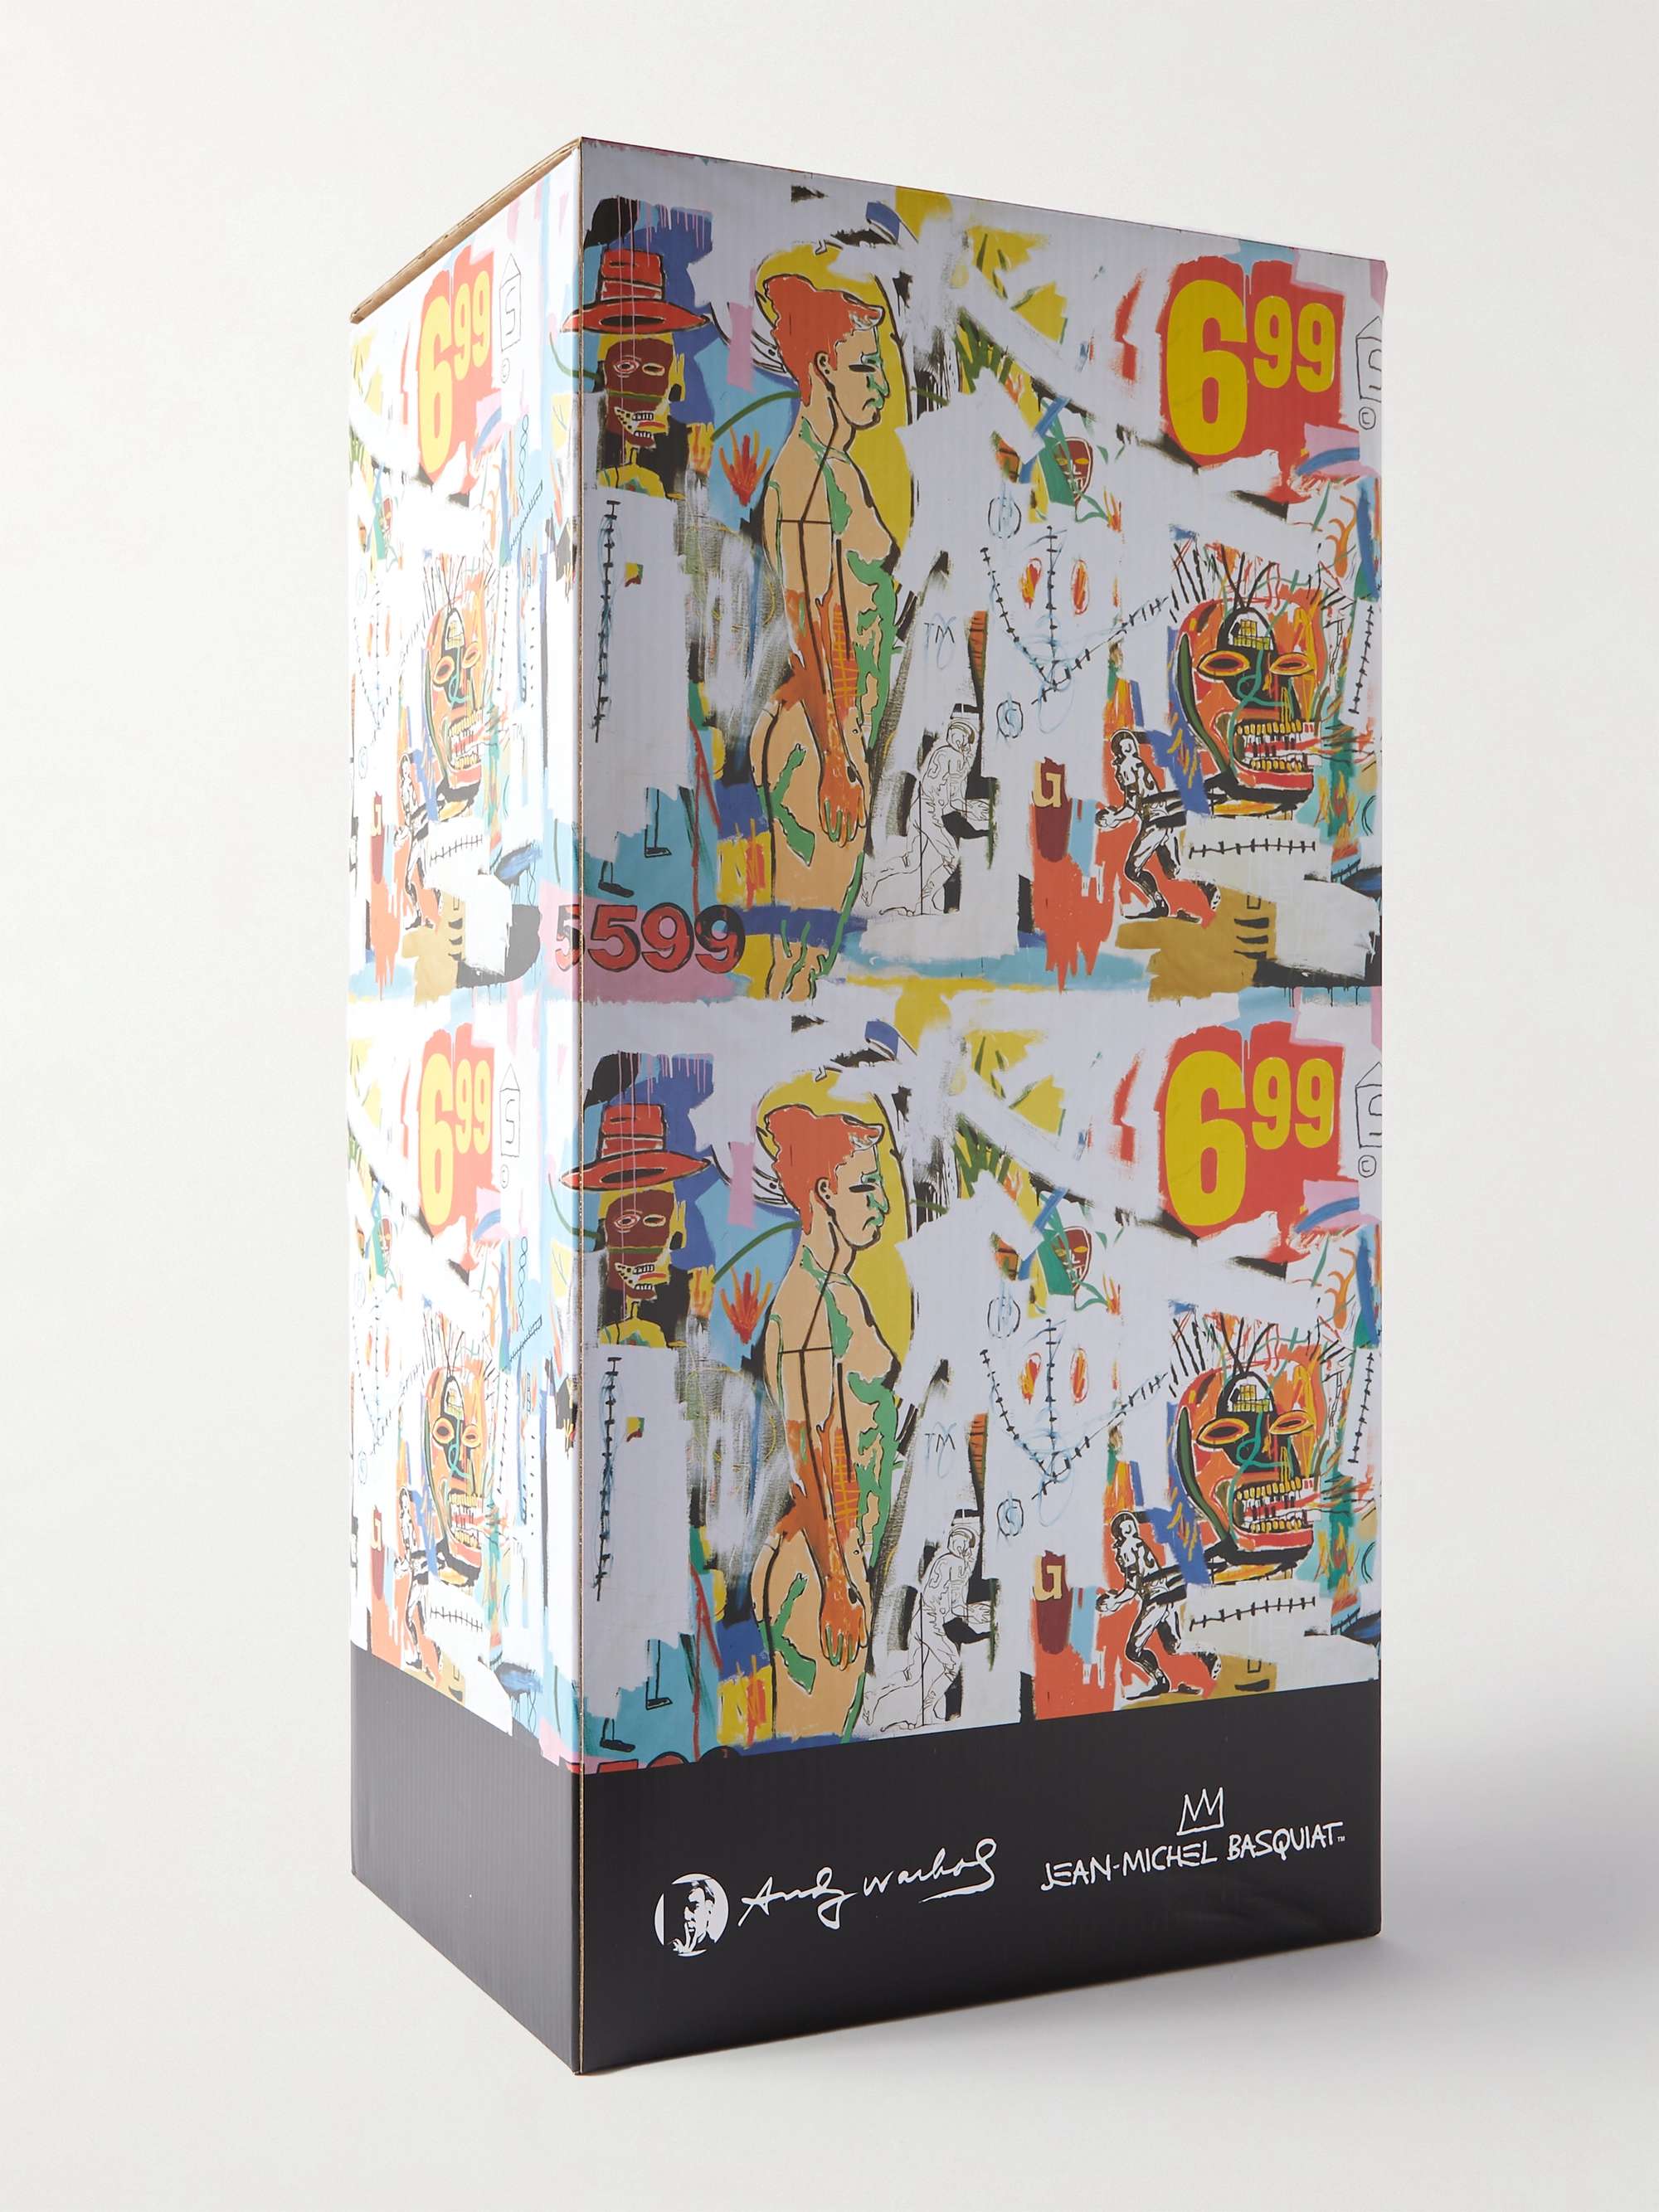 BE@RBRICK + Andy Warhol + Jean-Michel Basquiat 400% Printed PVC Figurine